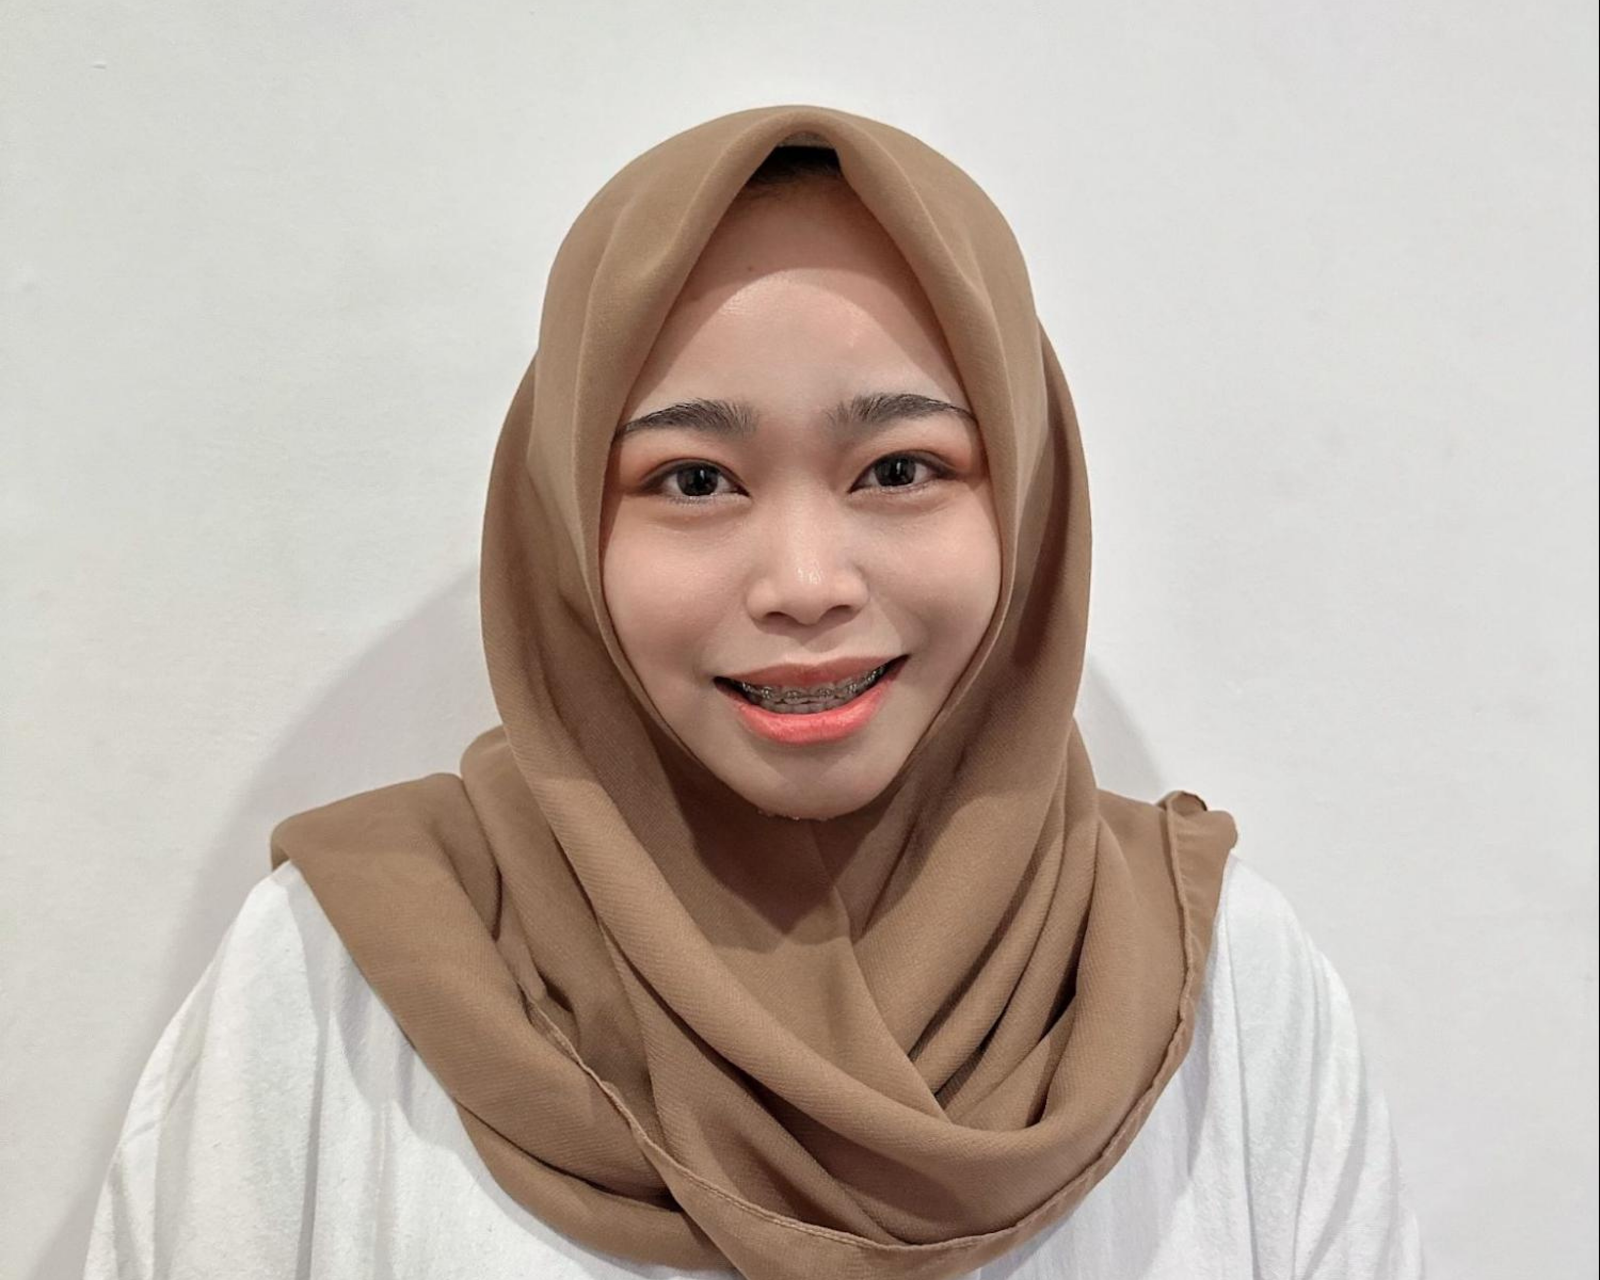 Headshot of Veronica Putri Anggraini, smiling